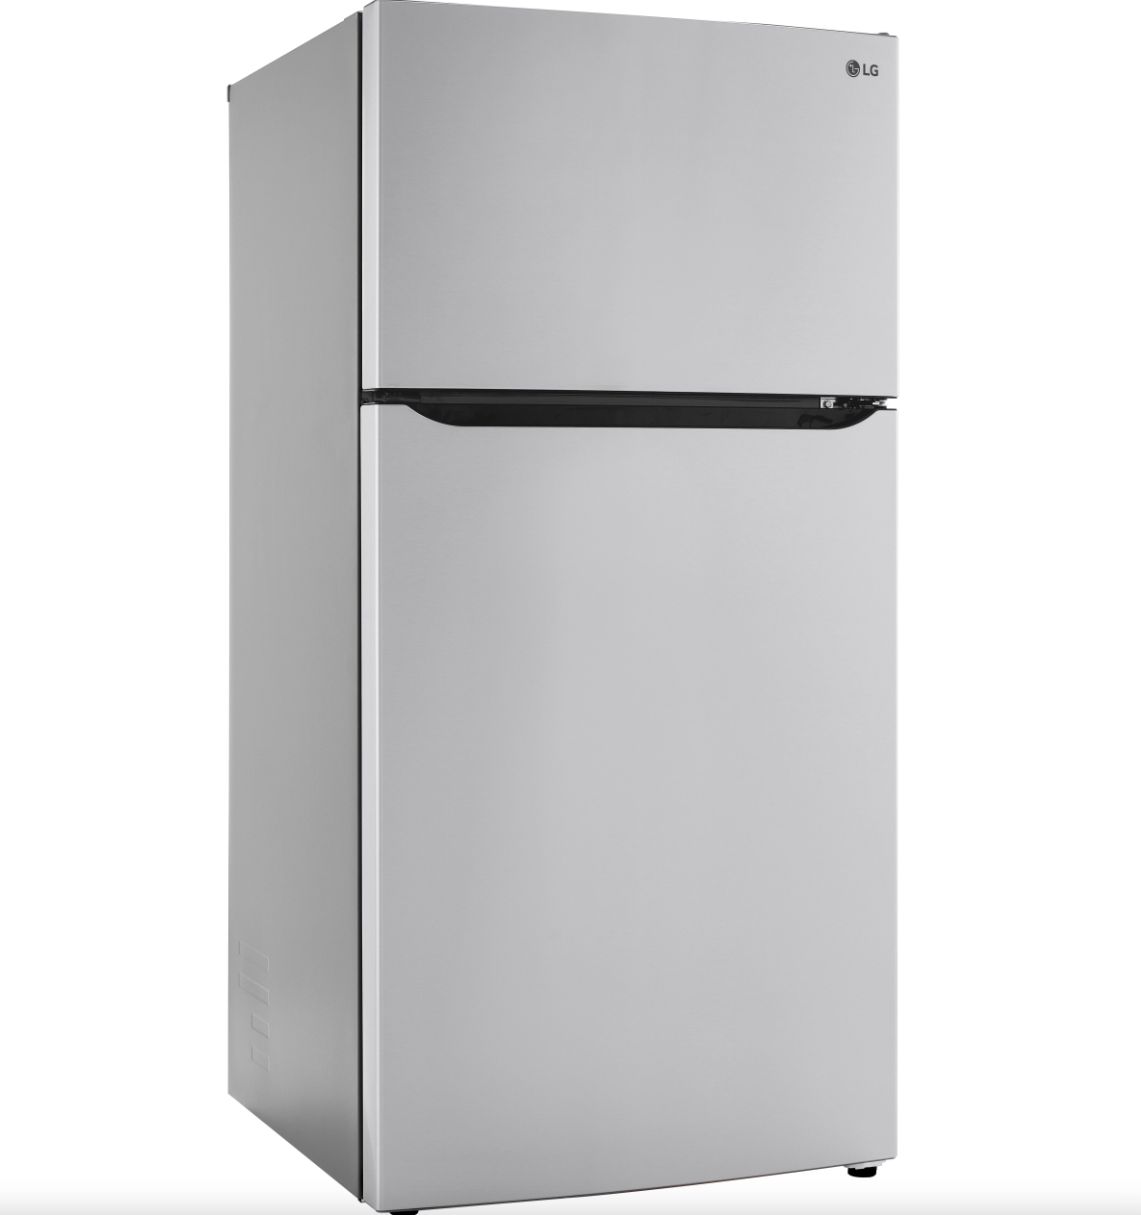 LG 33 Inch Top Freezer Refrigerator in Stainless Steel 24 Cu. Ft. (LRTLS2403S)